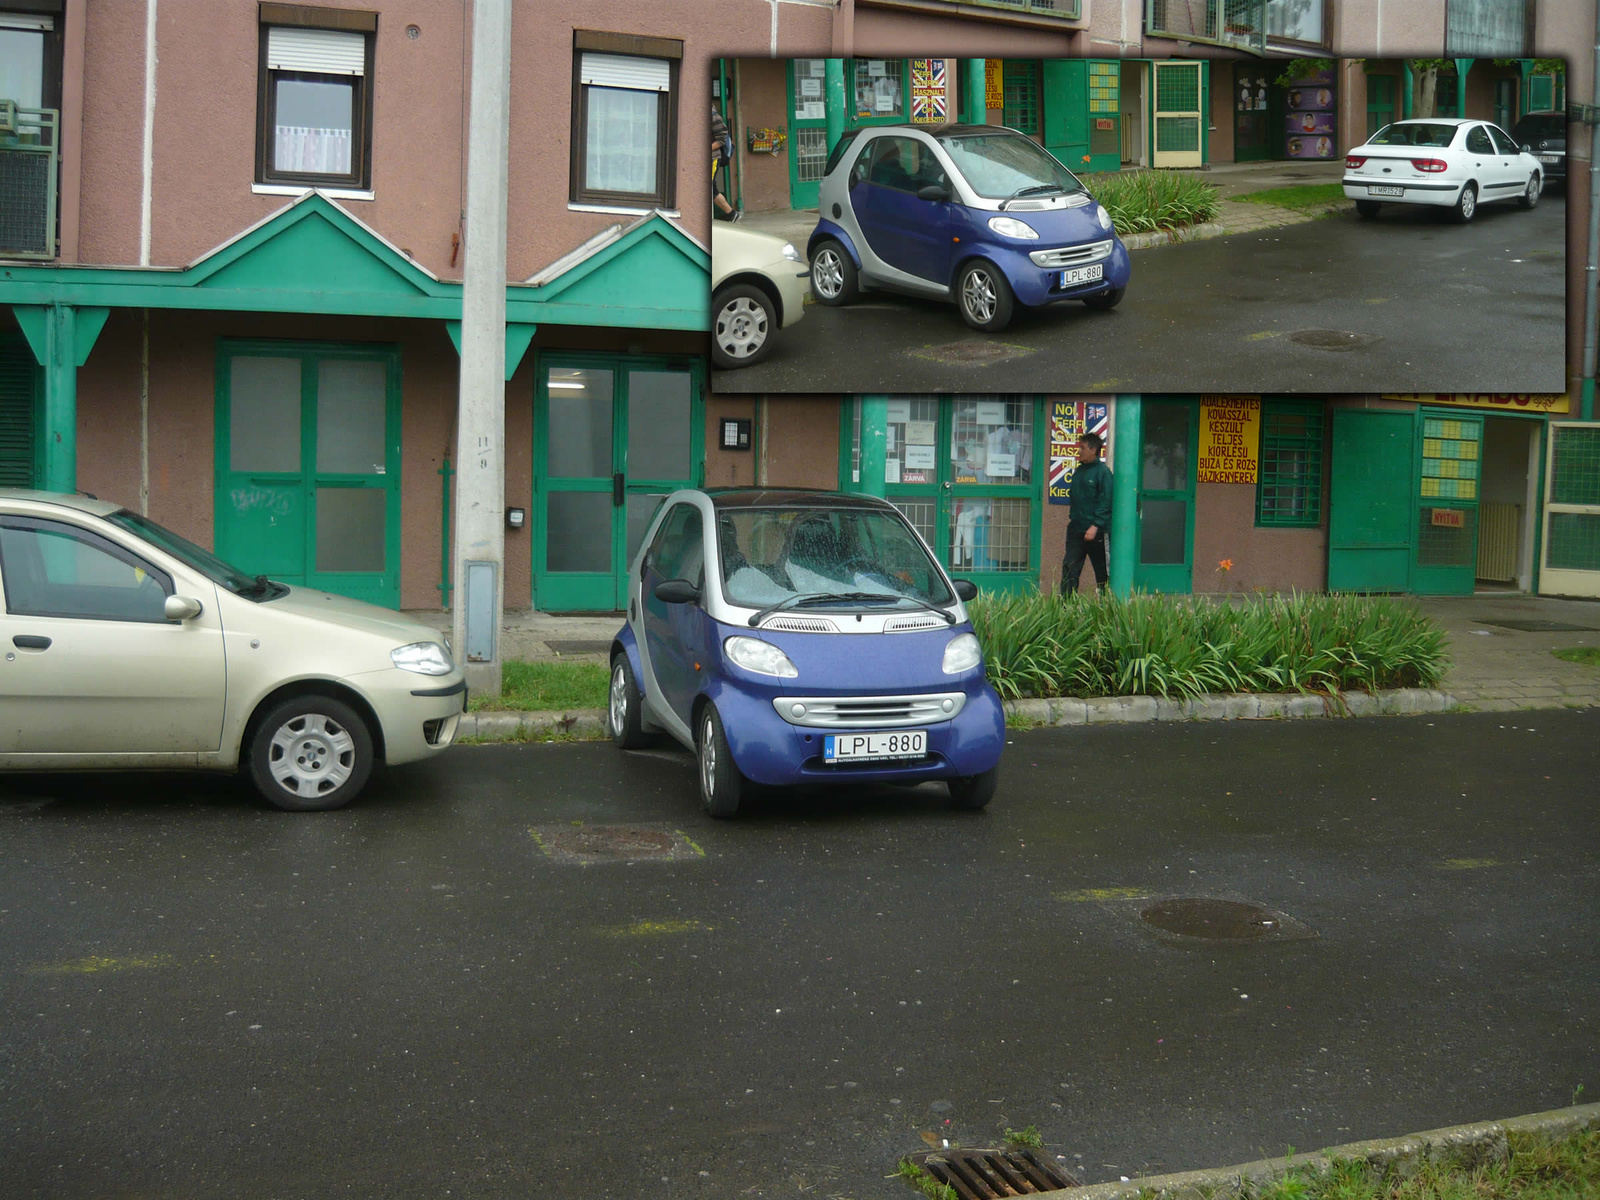 Smart - hogyan ne parkoljunk okosan